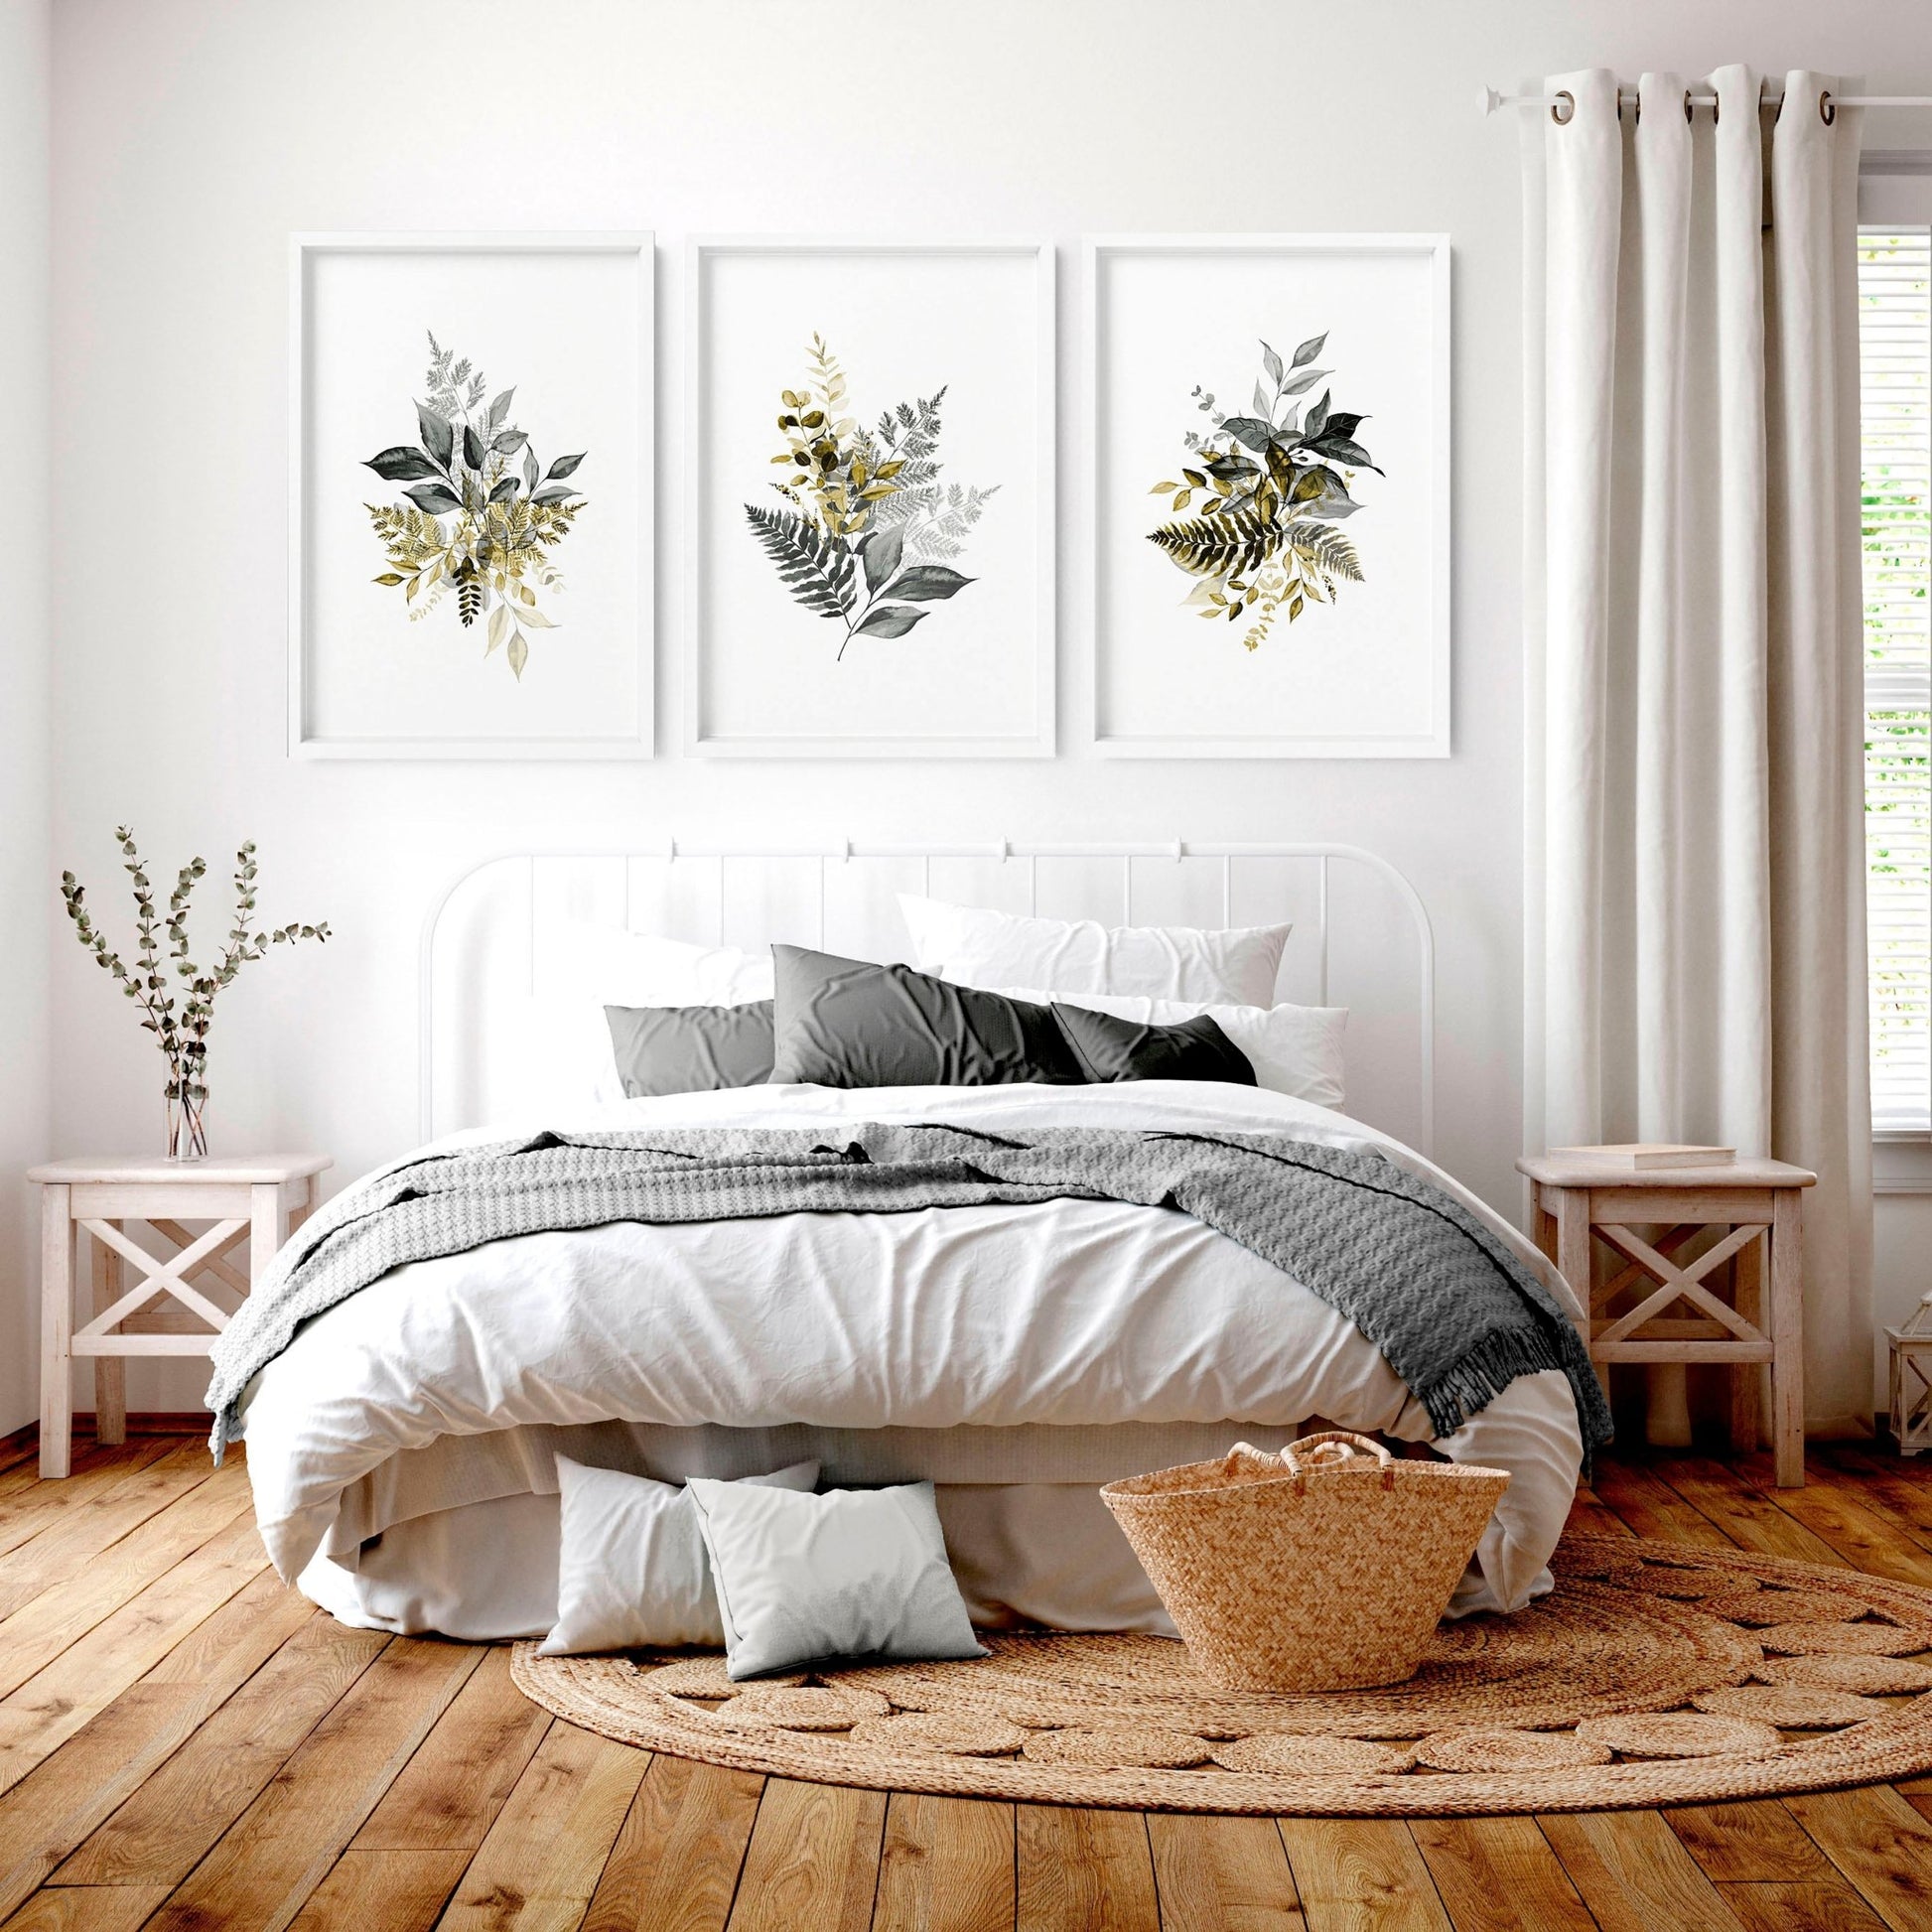 Bedroom wall prints | set of 3 wall art prints - About Wall Art